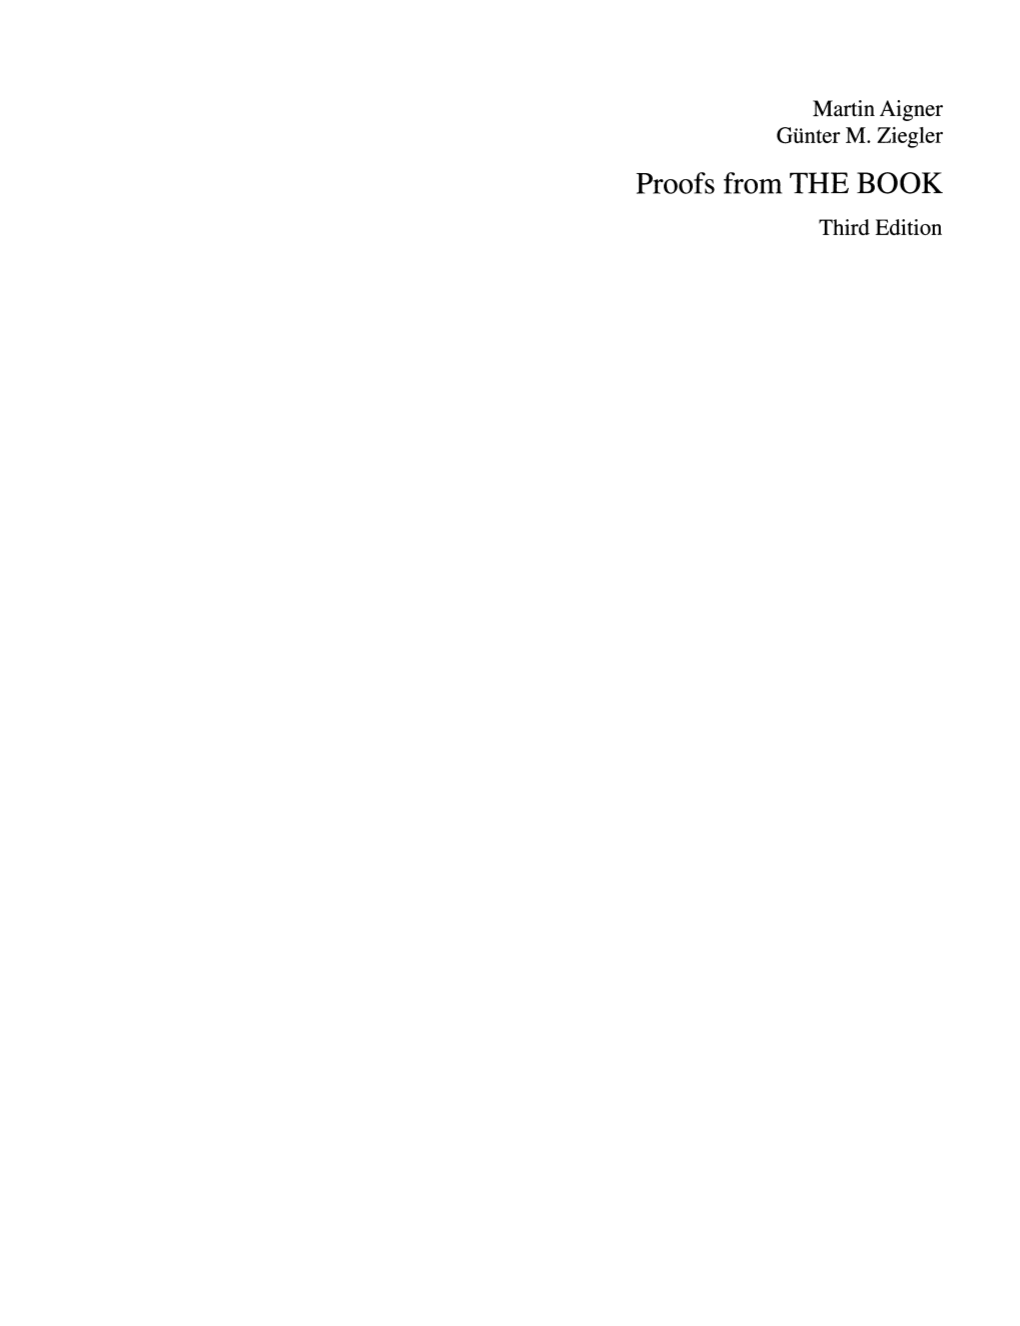 Proofs from the BOOK Third Edition Springer-Verlag Berlin Heidelberg Gmbh Martin Aigner Gunter M